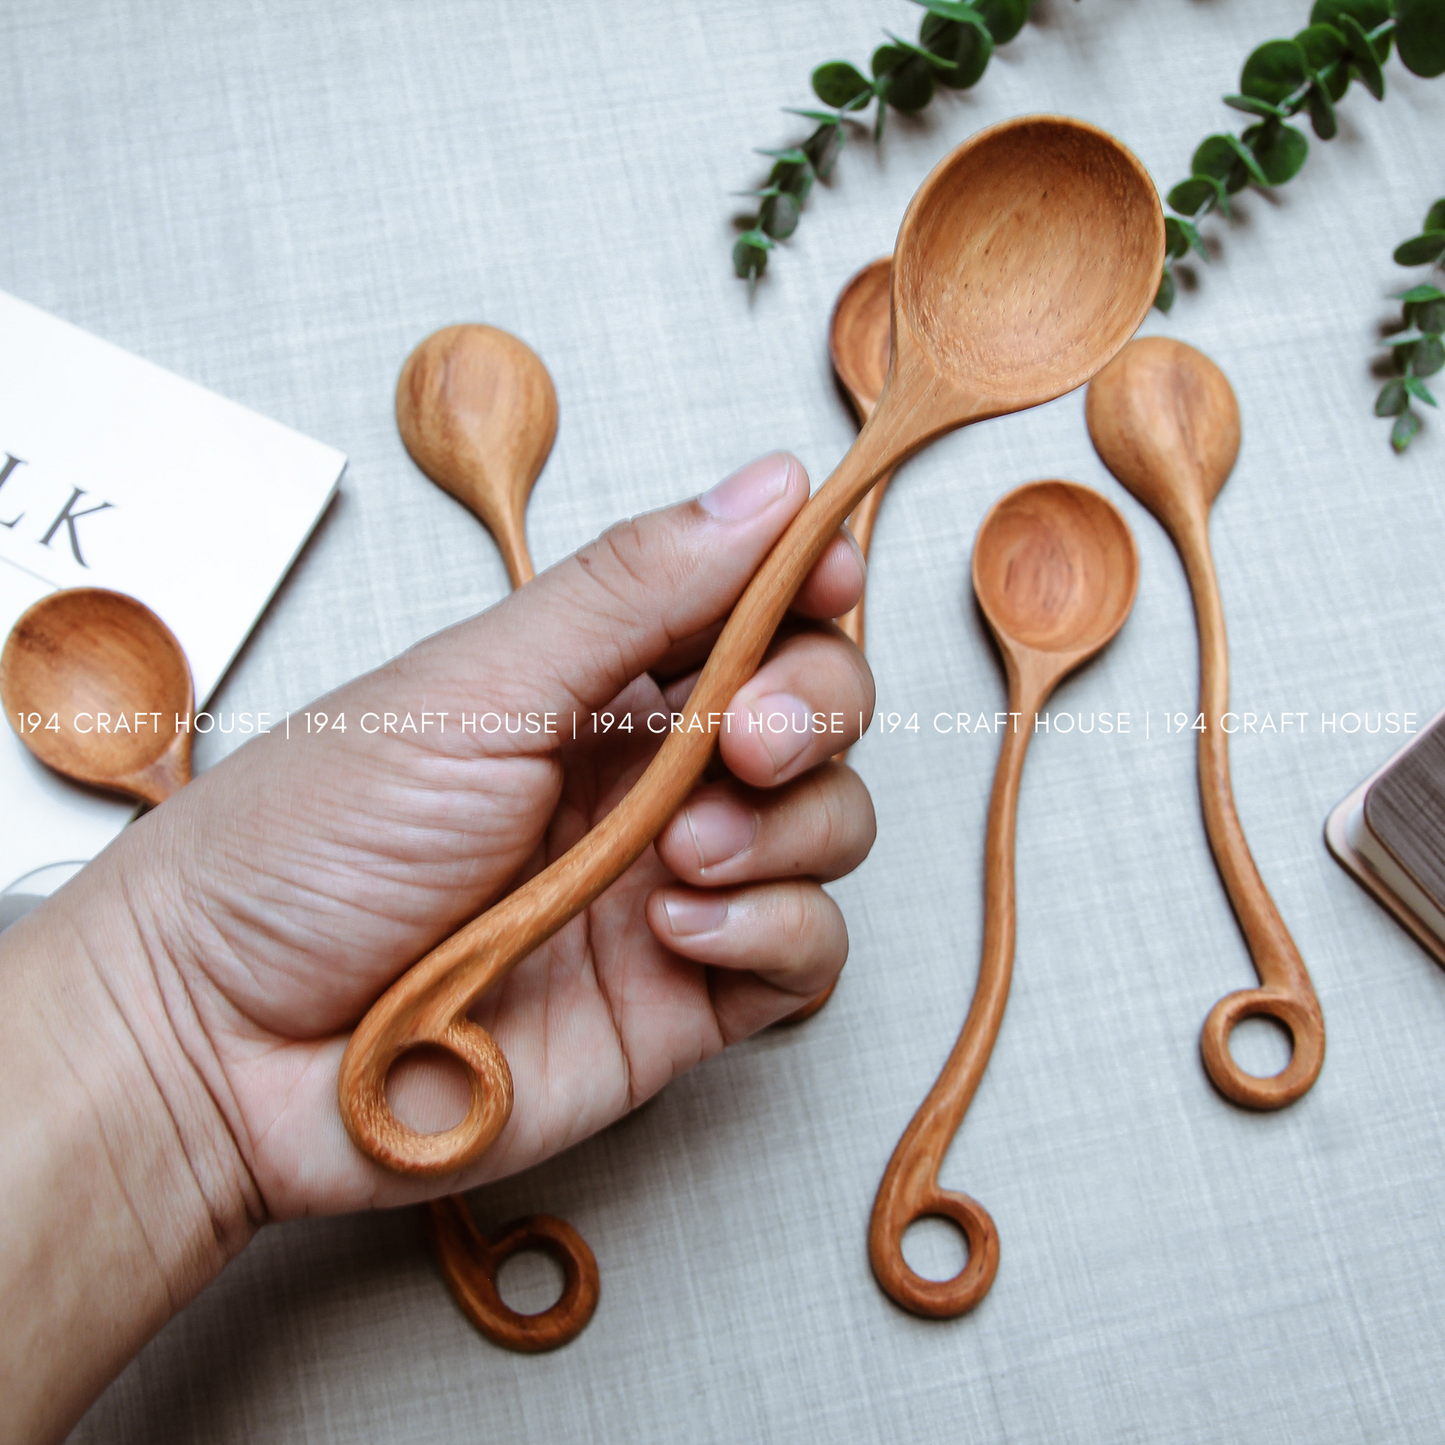 Handcrafted Wooden Spoon - Kitchen Cooking Utensils